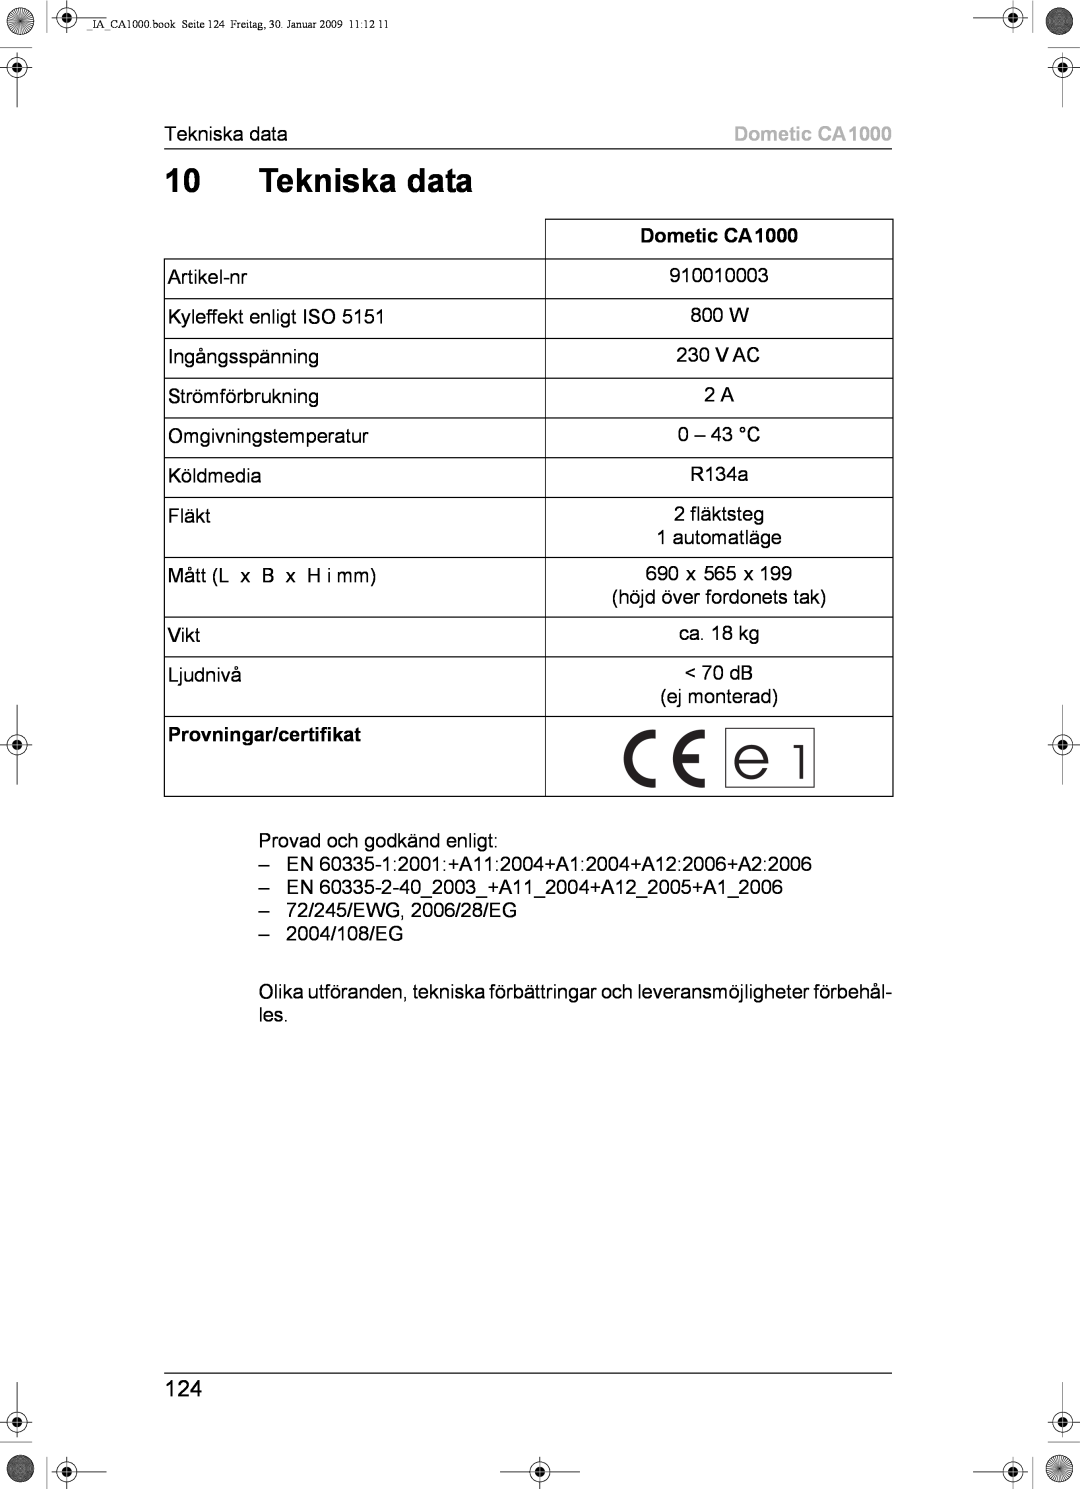 Dometic installation manual Tekniska data, Provningar/certifikat, Dometic CA1000 